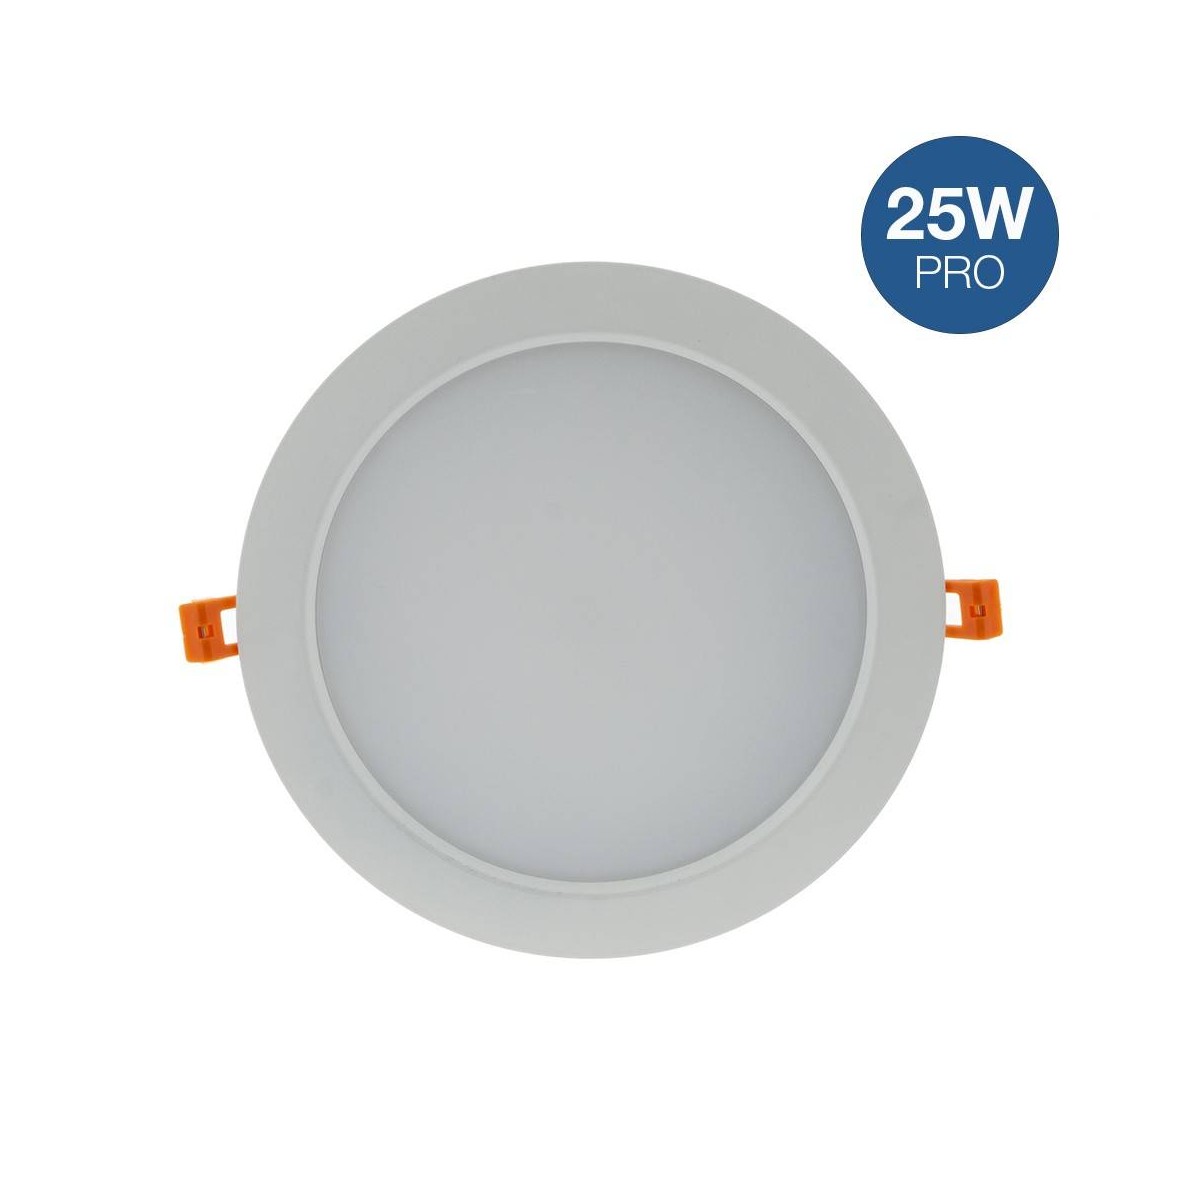 Professional LED downlight professional 25W circular recessed Ø 190 mm